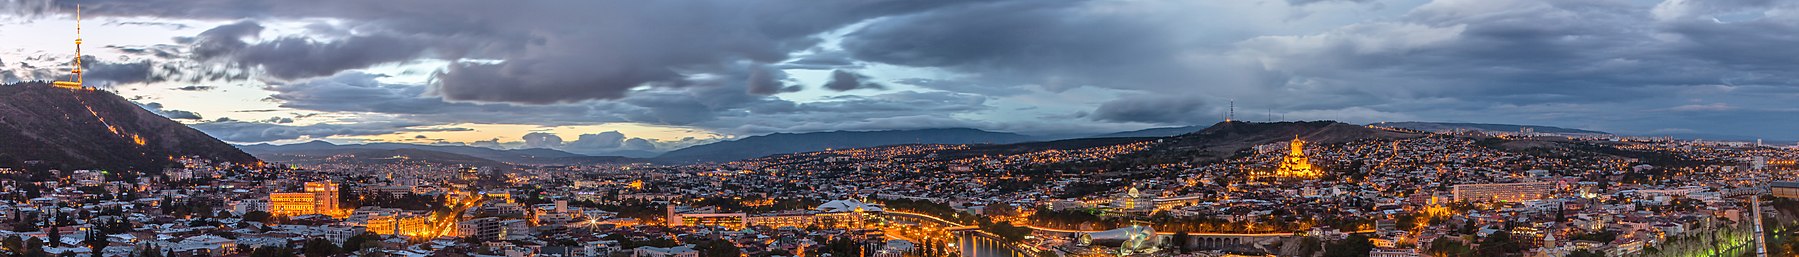 2017 - banner - Georgia - The Evening Tbilisi.jpg